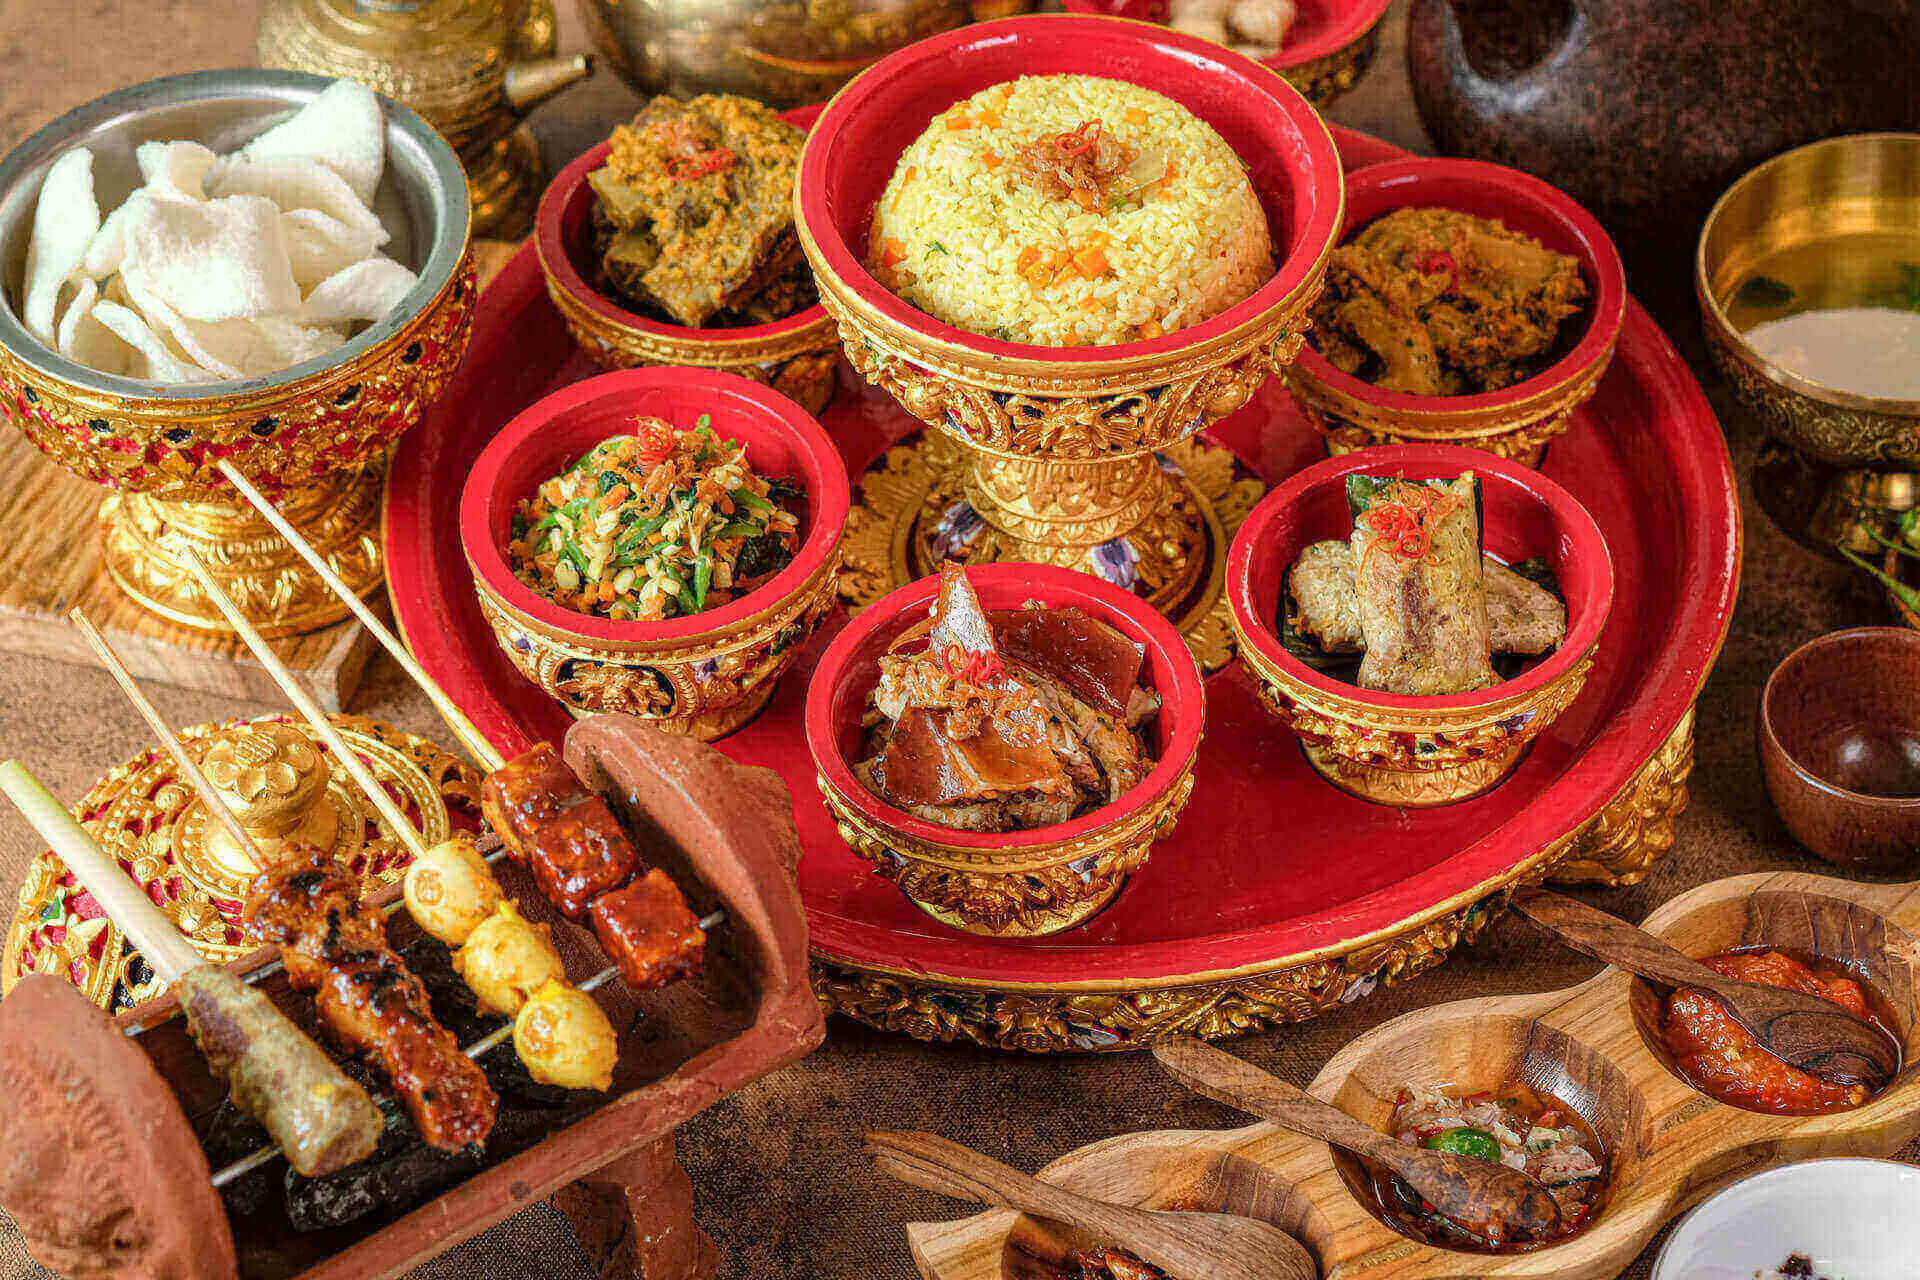 Food from Balinese Rijsttafel Plate at Dapur Raja